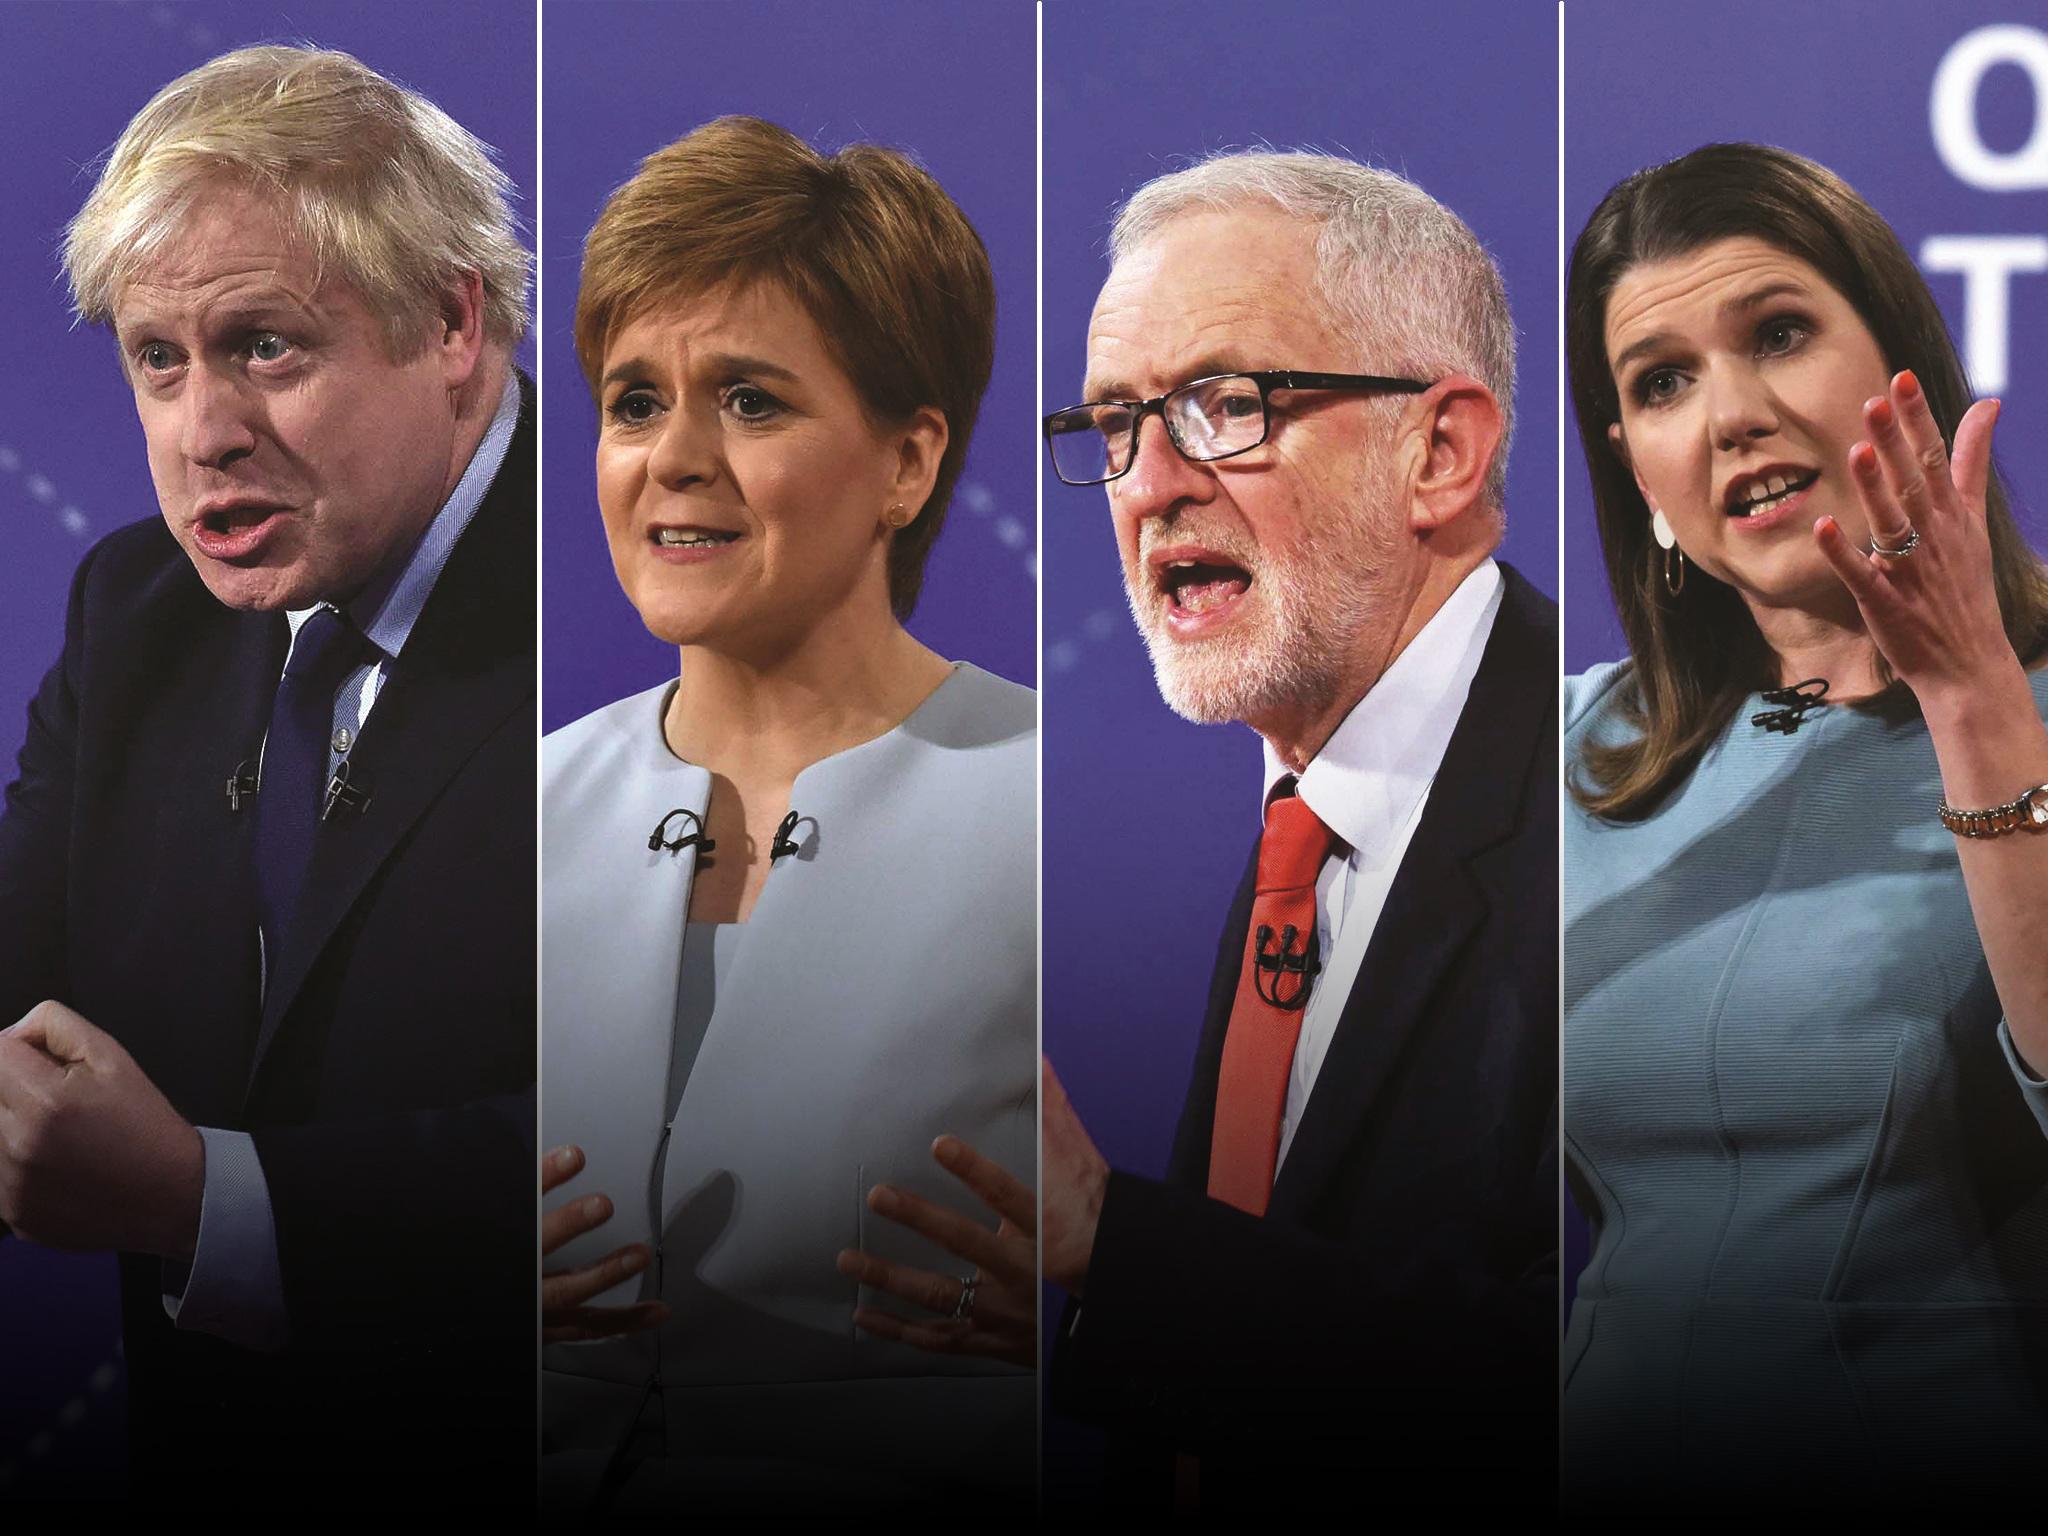 On Question Time last week: Boris Johnson, Nicola Sturgeon, Jeremy Corbyn and Jo Swinson